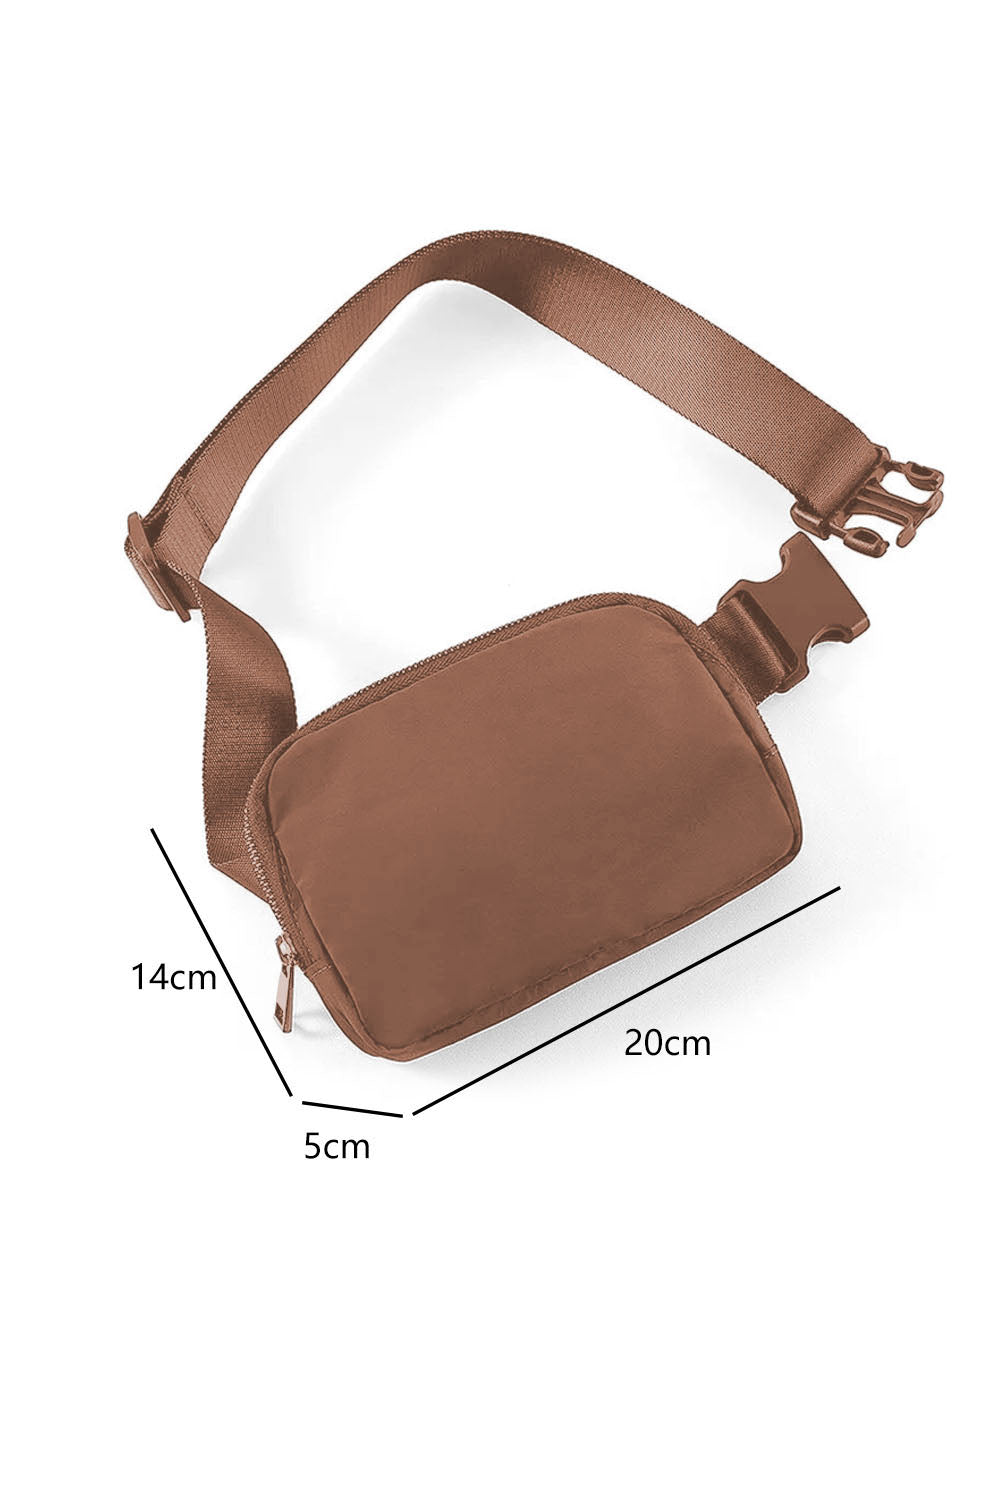 Waterproof Zipped Crossbody Bag 20*5*14cm